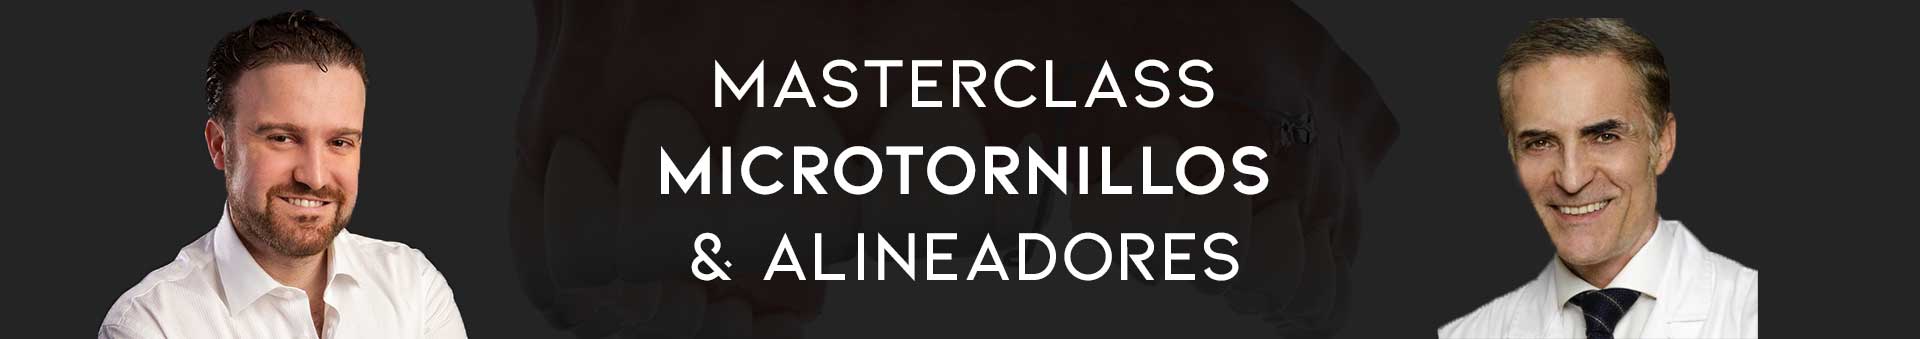 Masterclass Microtornillos ortodoncia alineadores